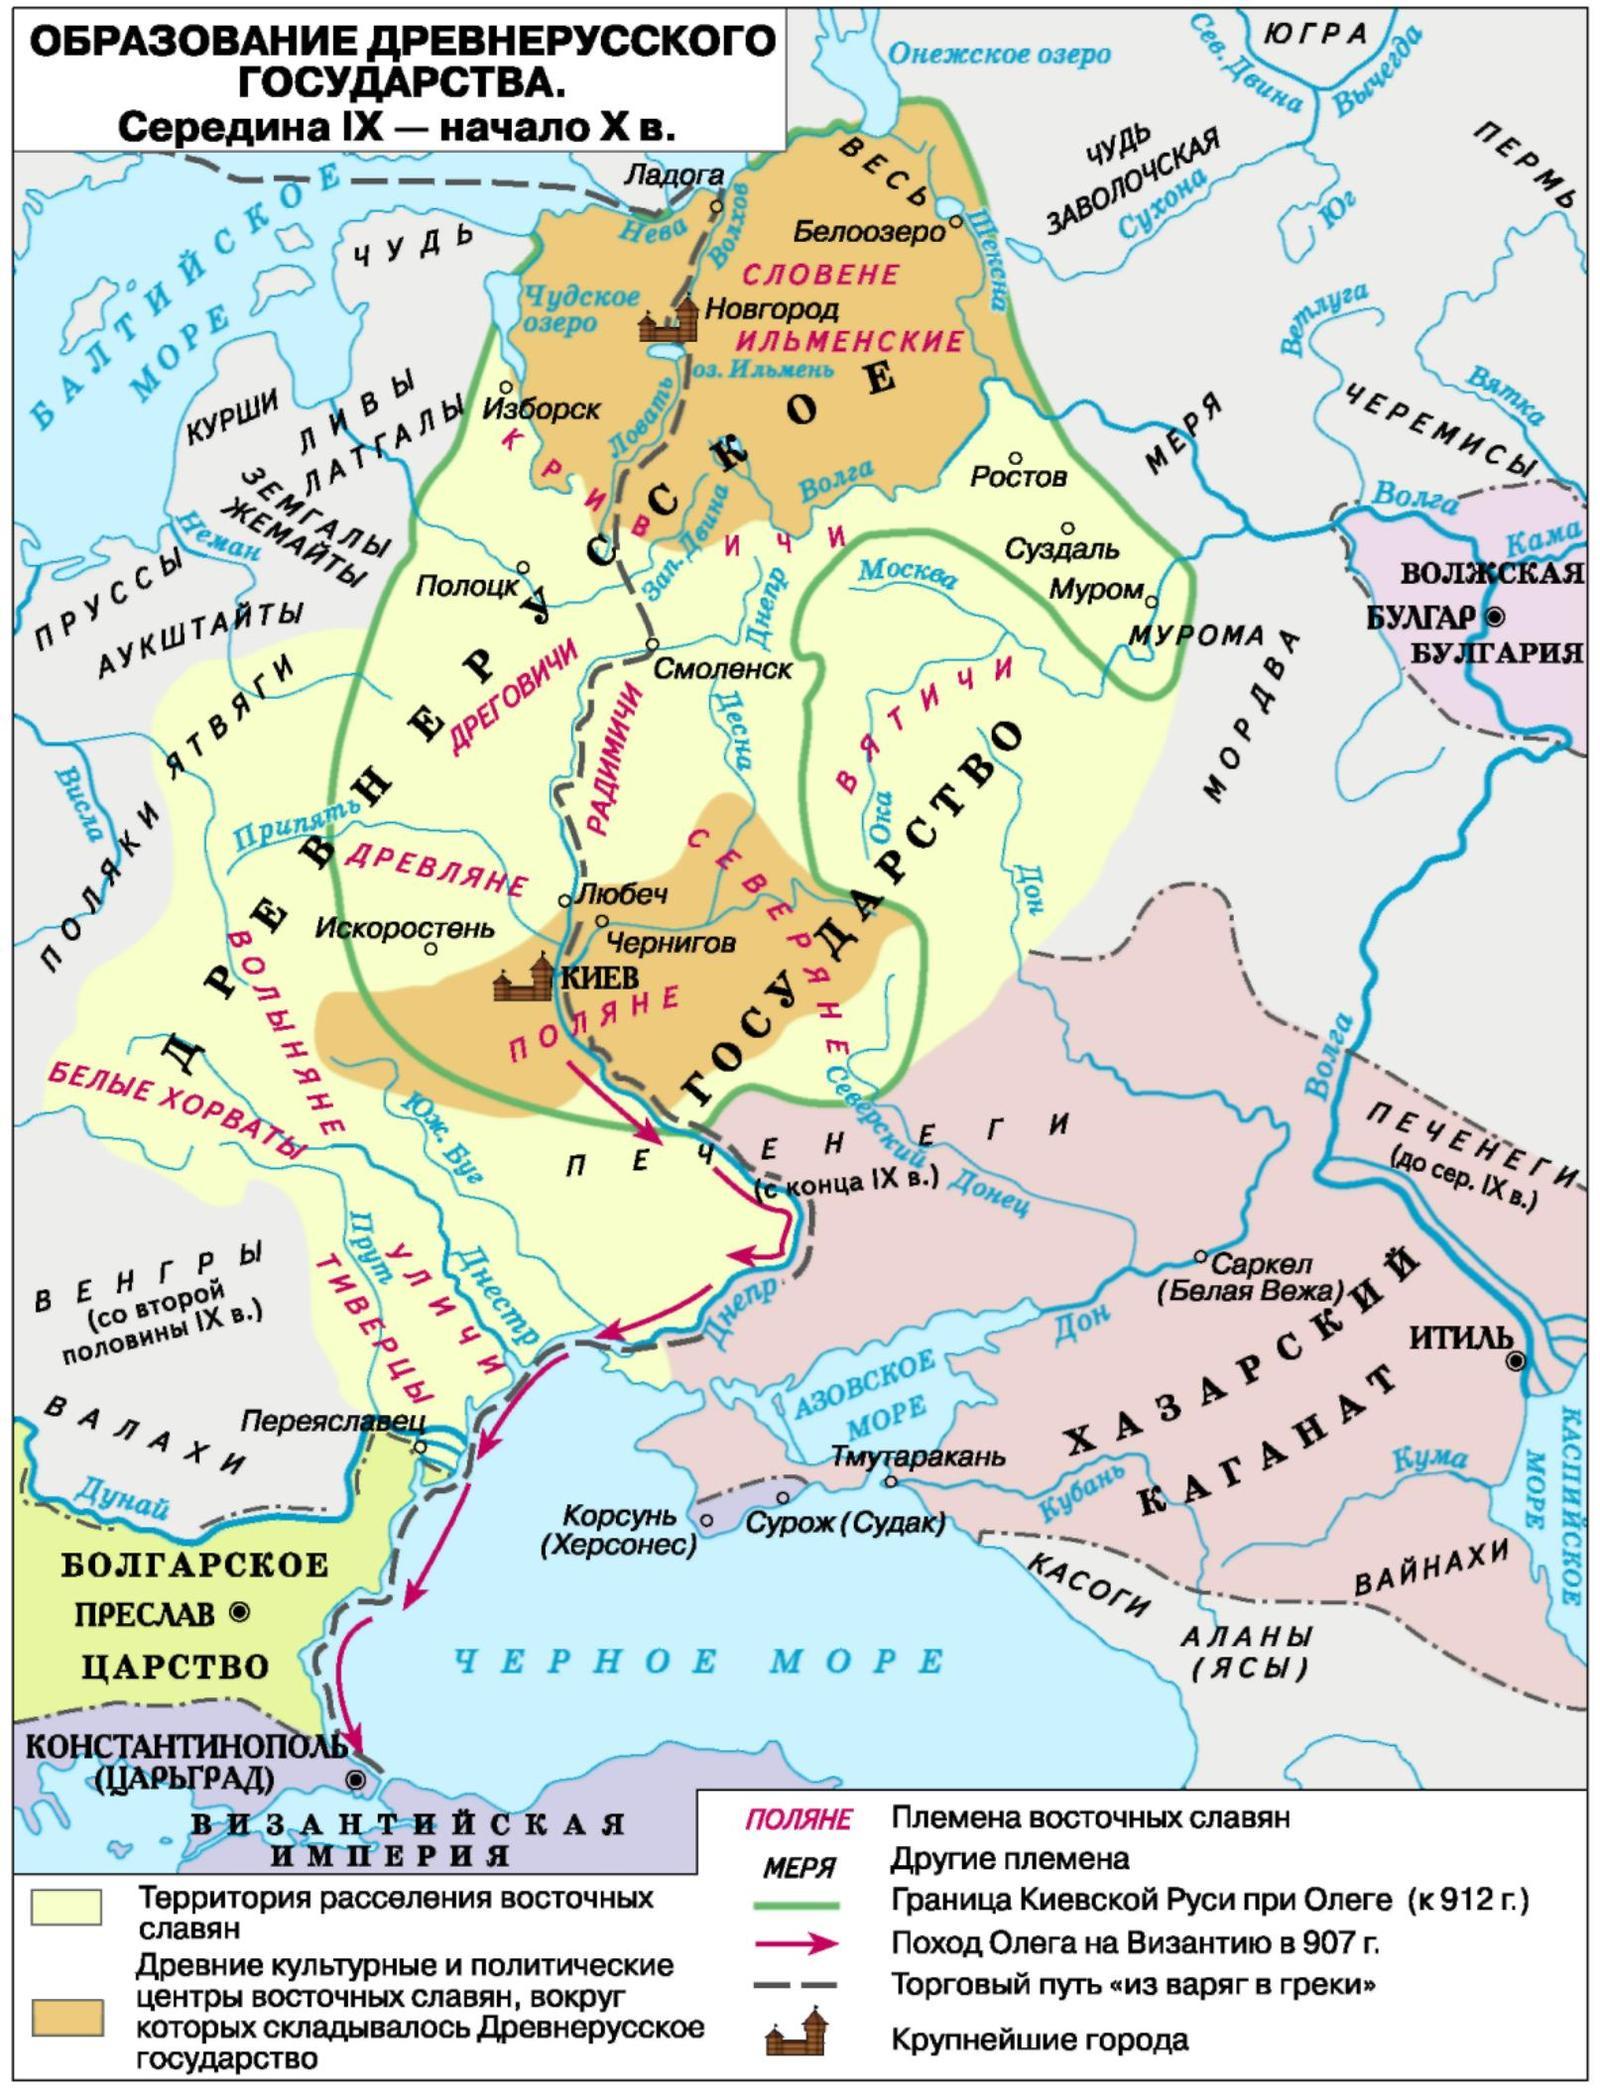 Prophetic Prince and Magi - League of Historians, Kievan Rus, Prophetic Oleg, 10th century, Longpost